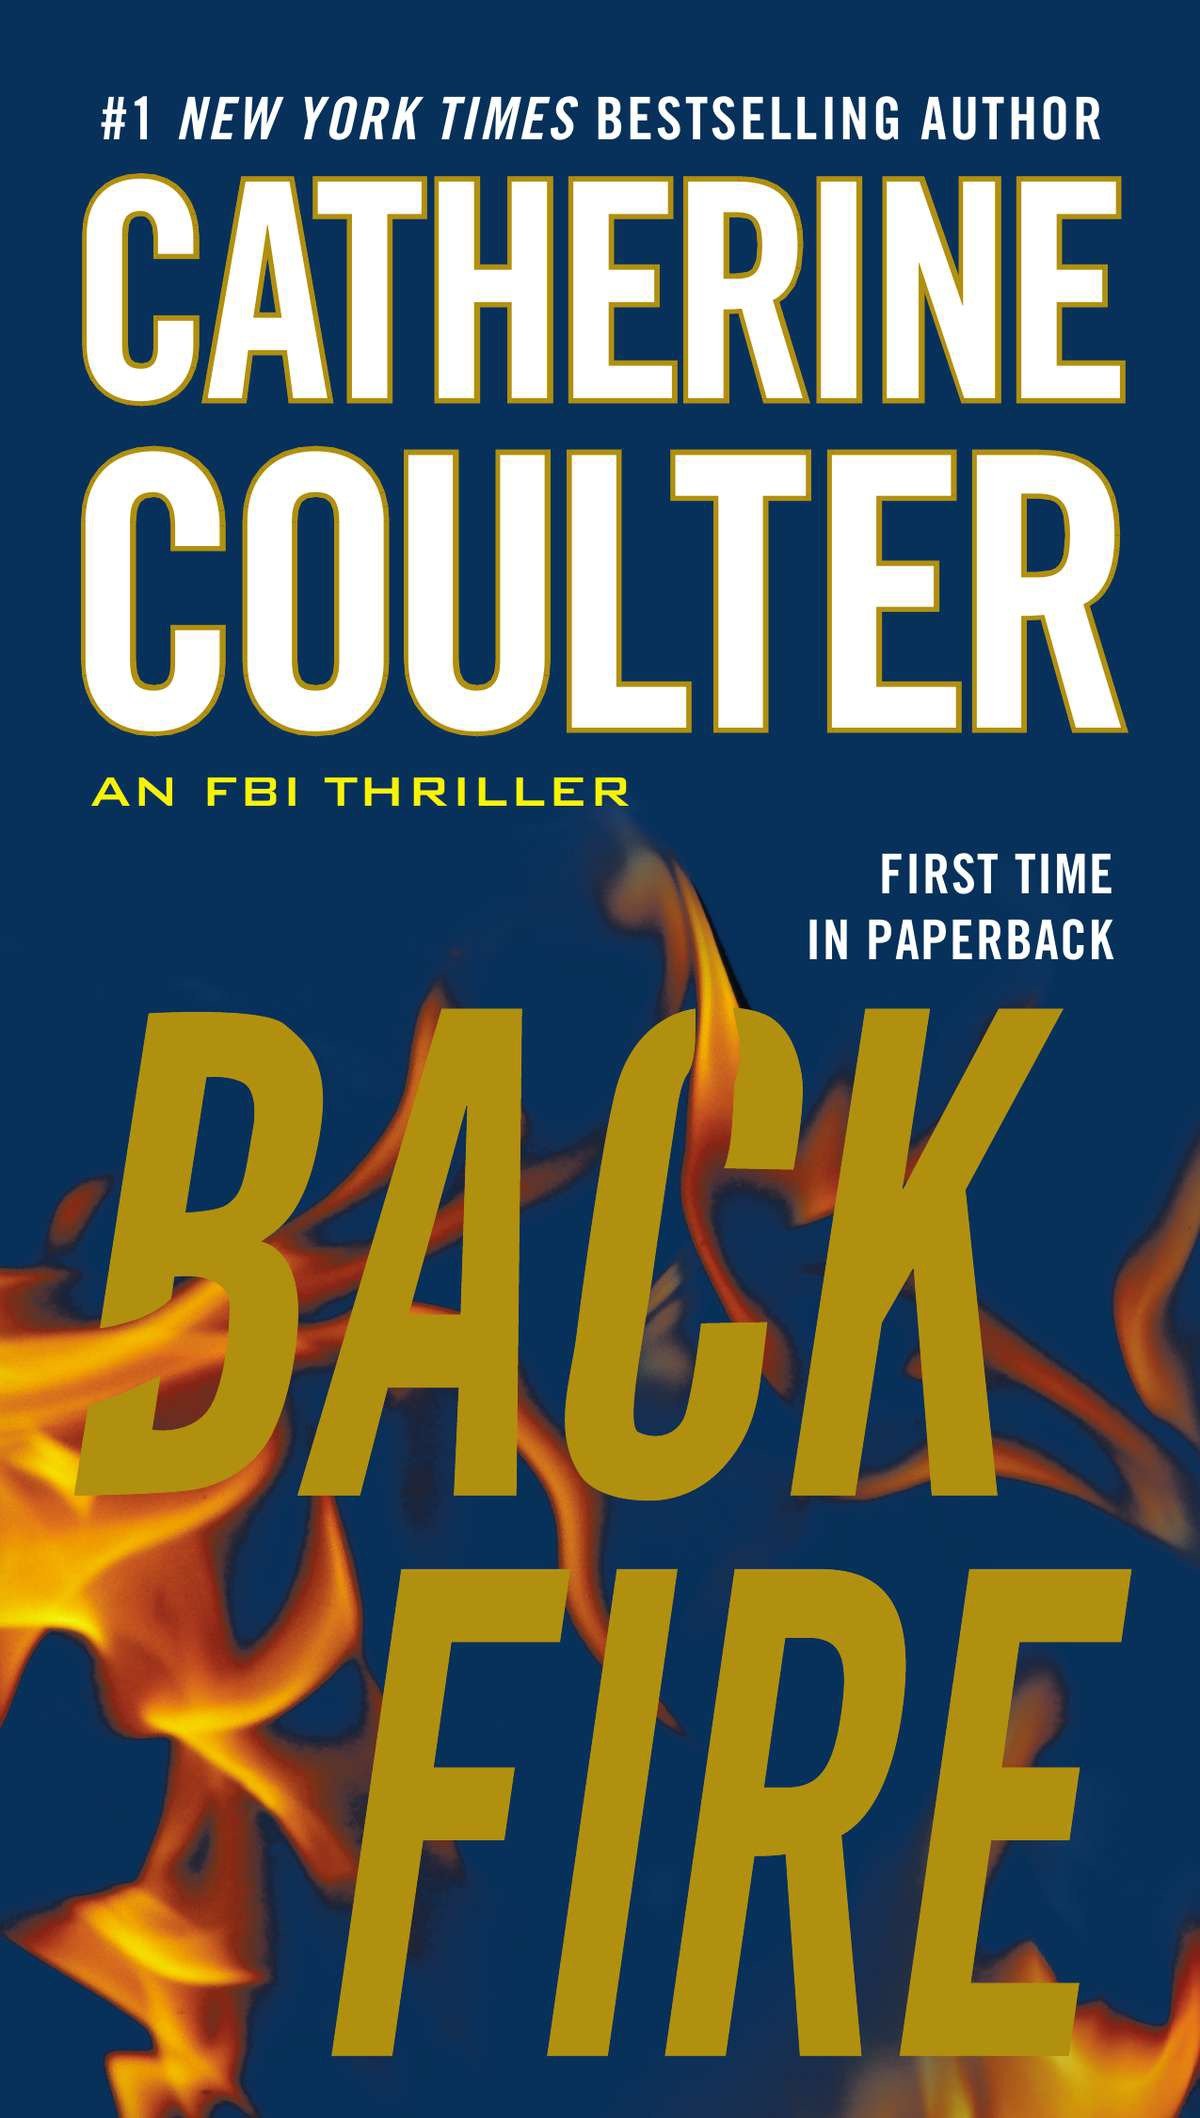 An FBI Thriller: Backfire (Series #16) (Paperback) - image 1 of 1